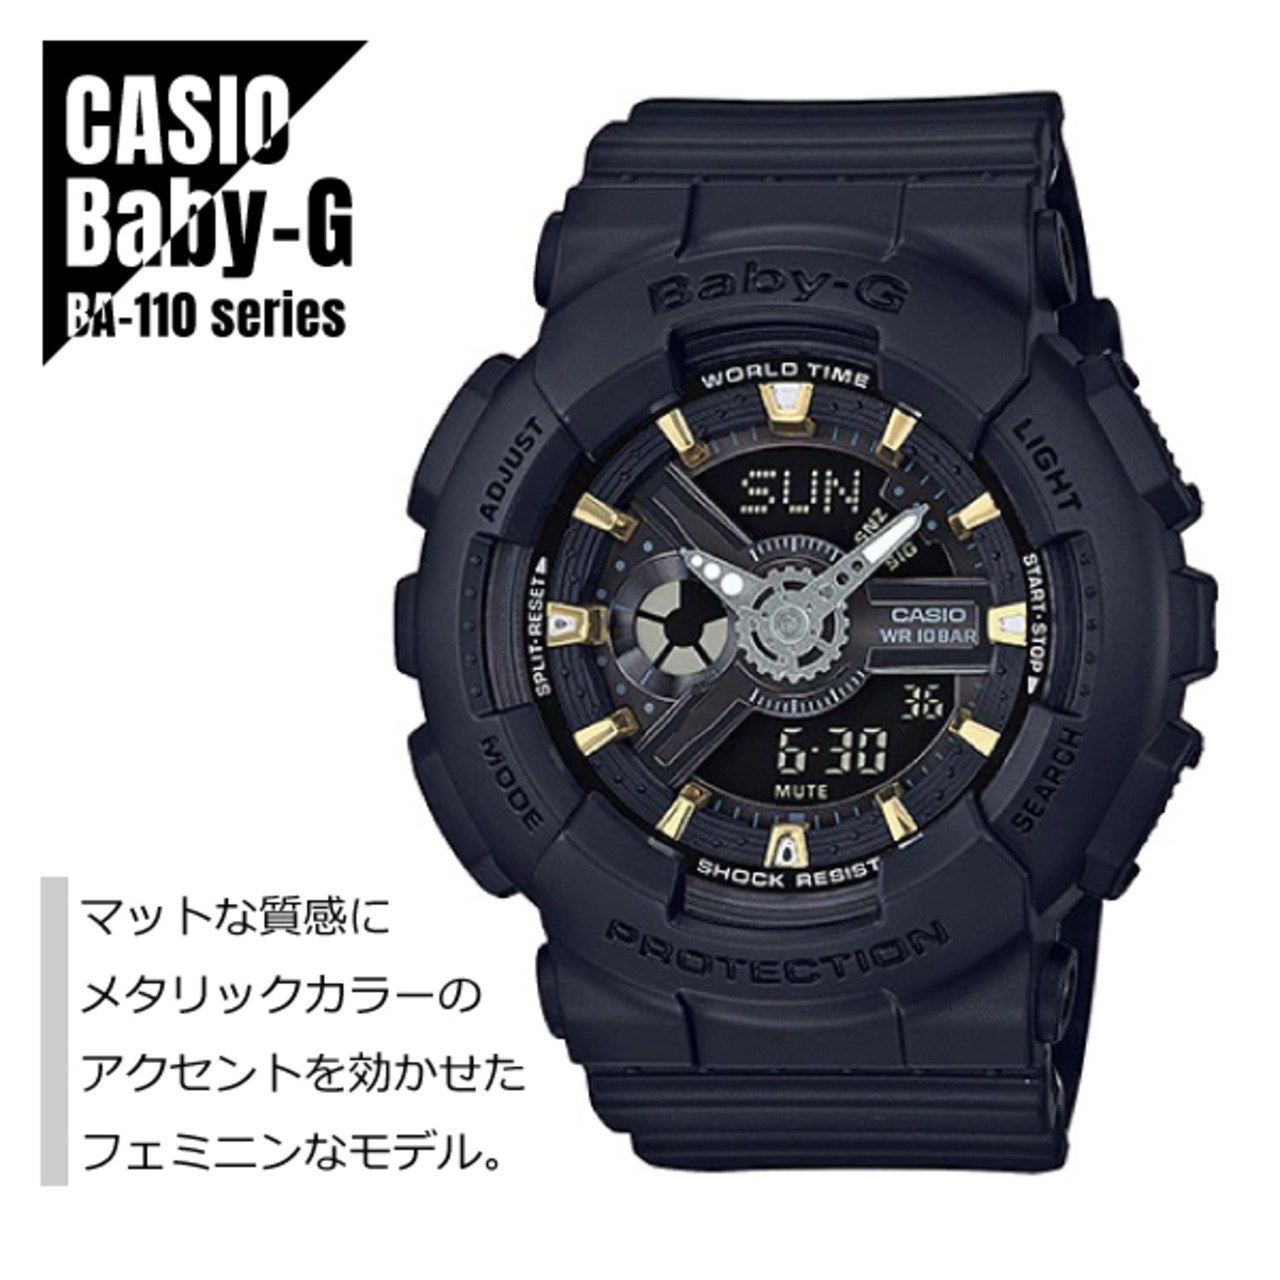 CASIO カシオ Baby-G ベビーG BA-110 シリーズ BA-110GA-1A ブラック 腕時計 レディース